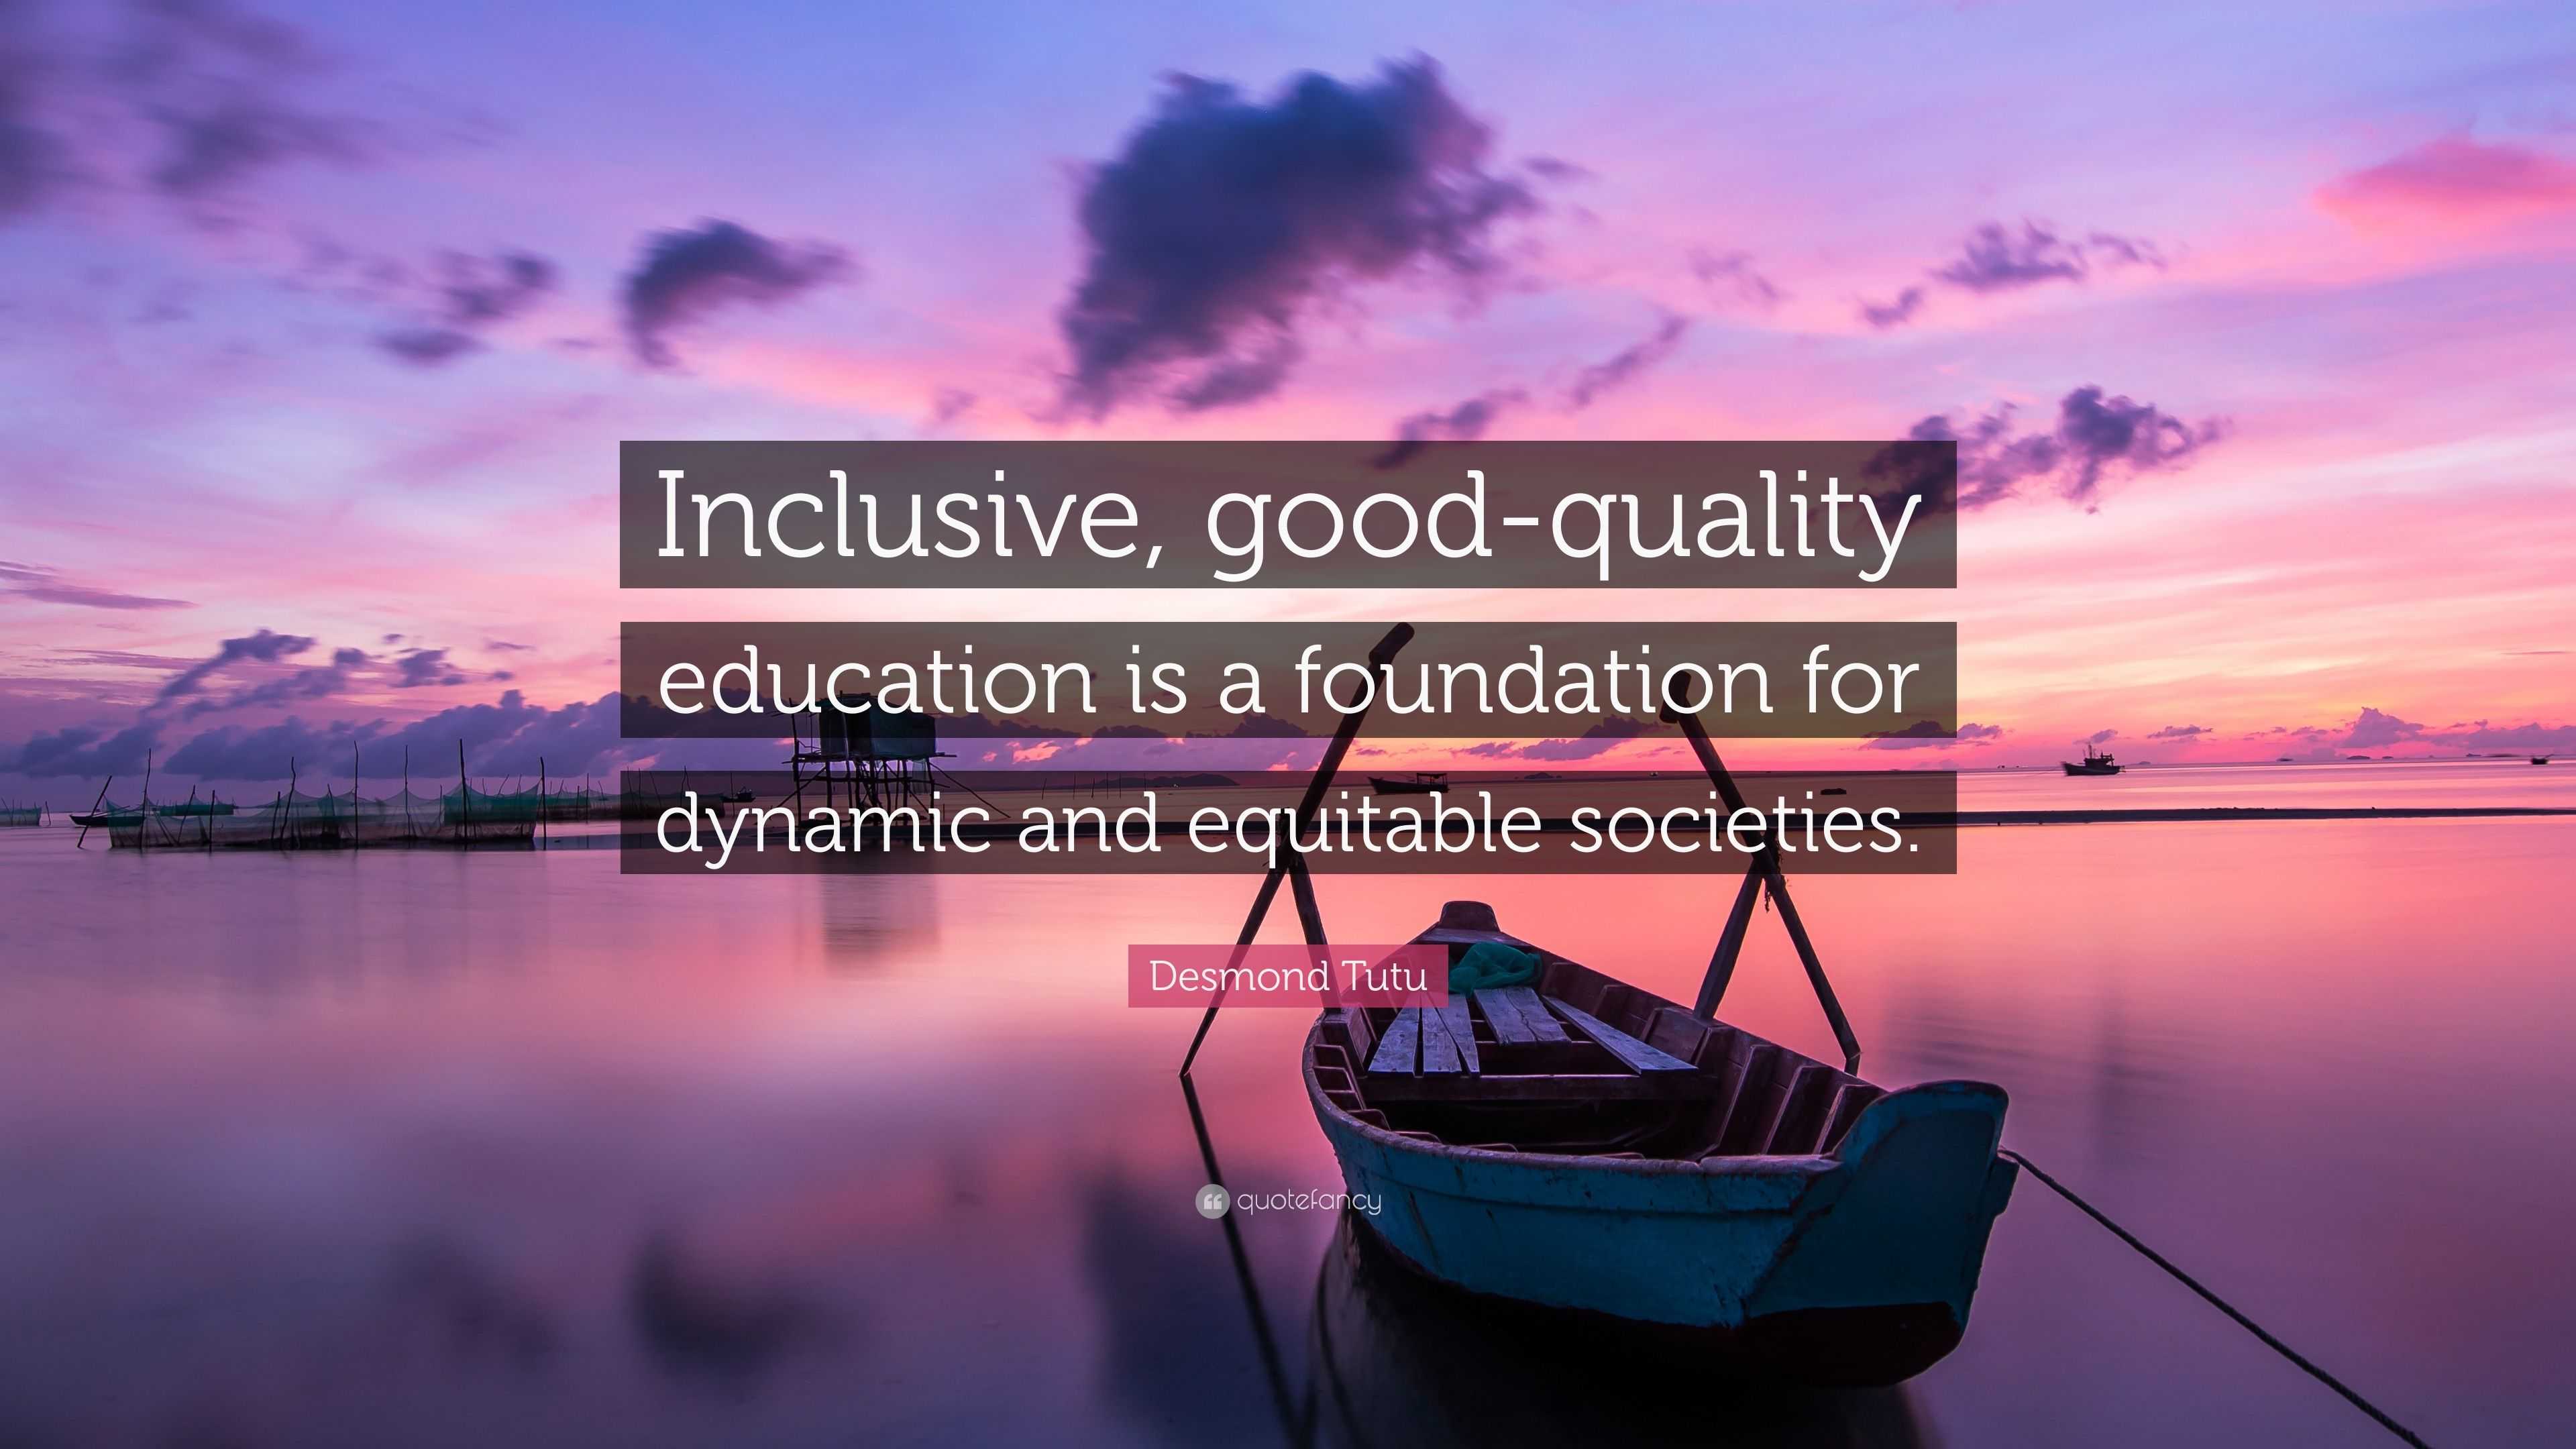 Desmond Tutu Quote: “Inclusive, good-quality education is a foundation